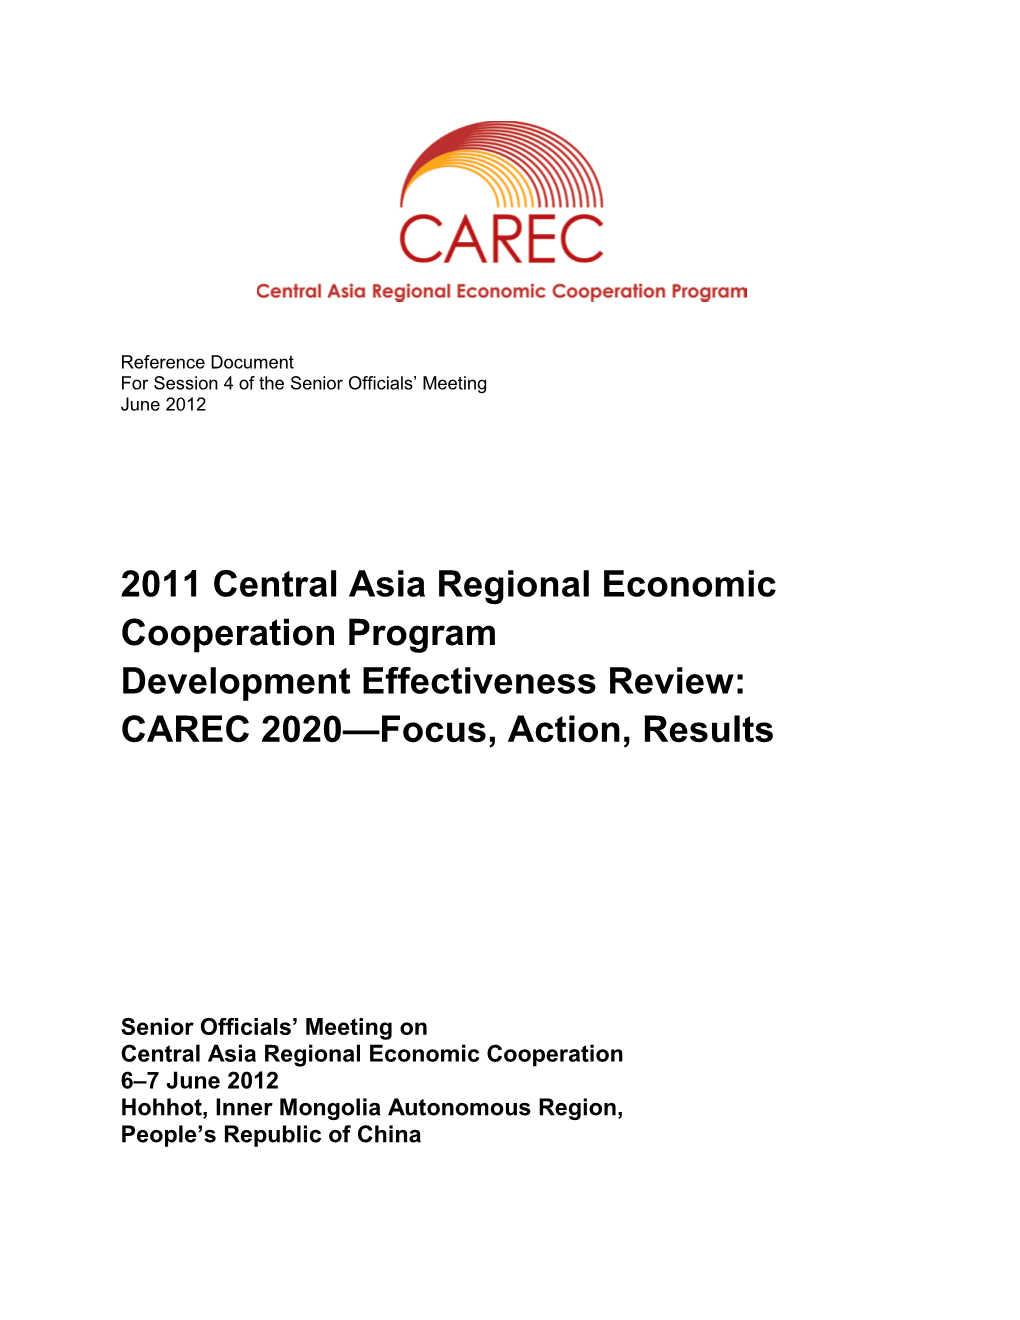 2011 Central Asia Regional Economic Cooperation Program Development Effectiveness Review: CAREC 2020—Focus, Action, Results